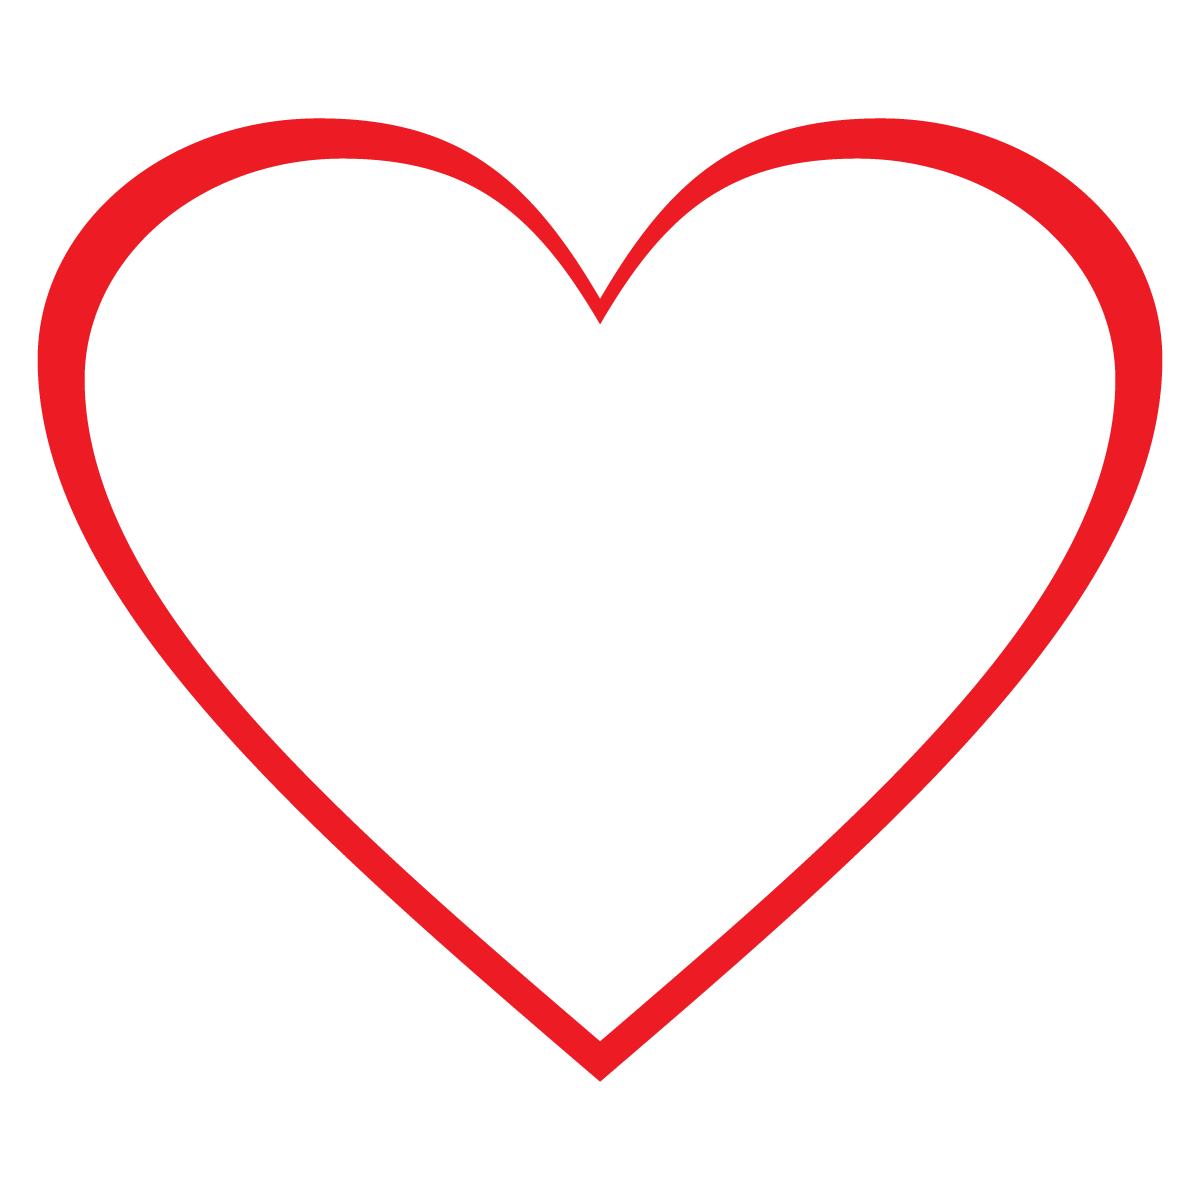 Love Hearts Clip Art - Heart Image Clipart